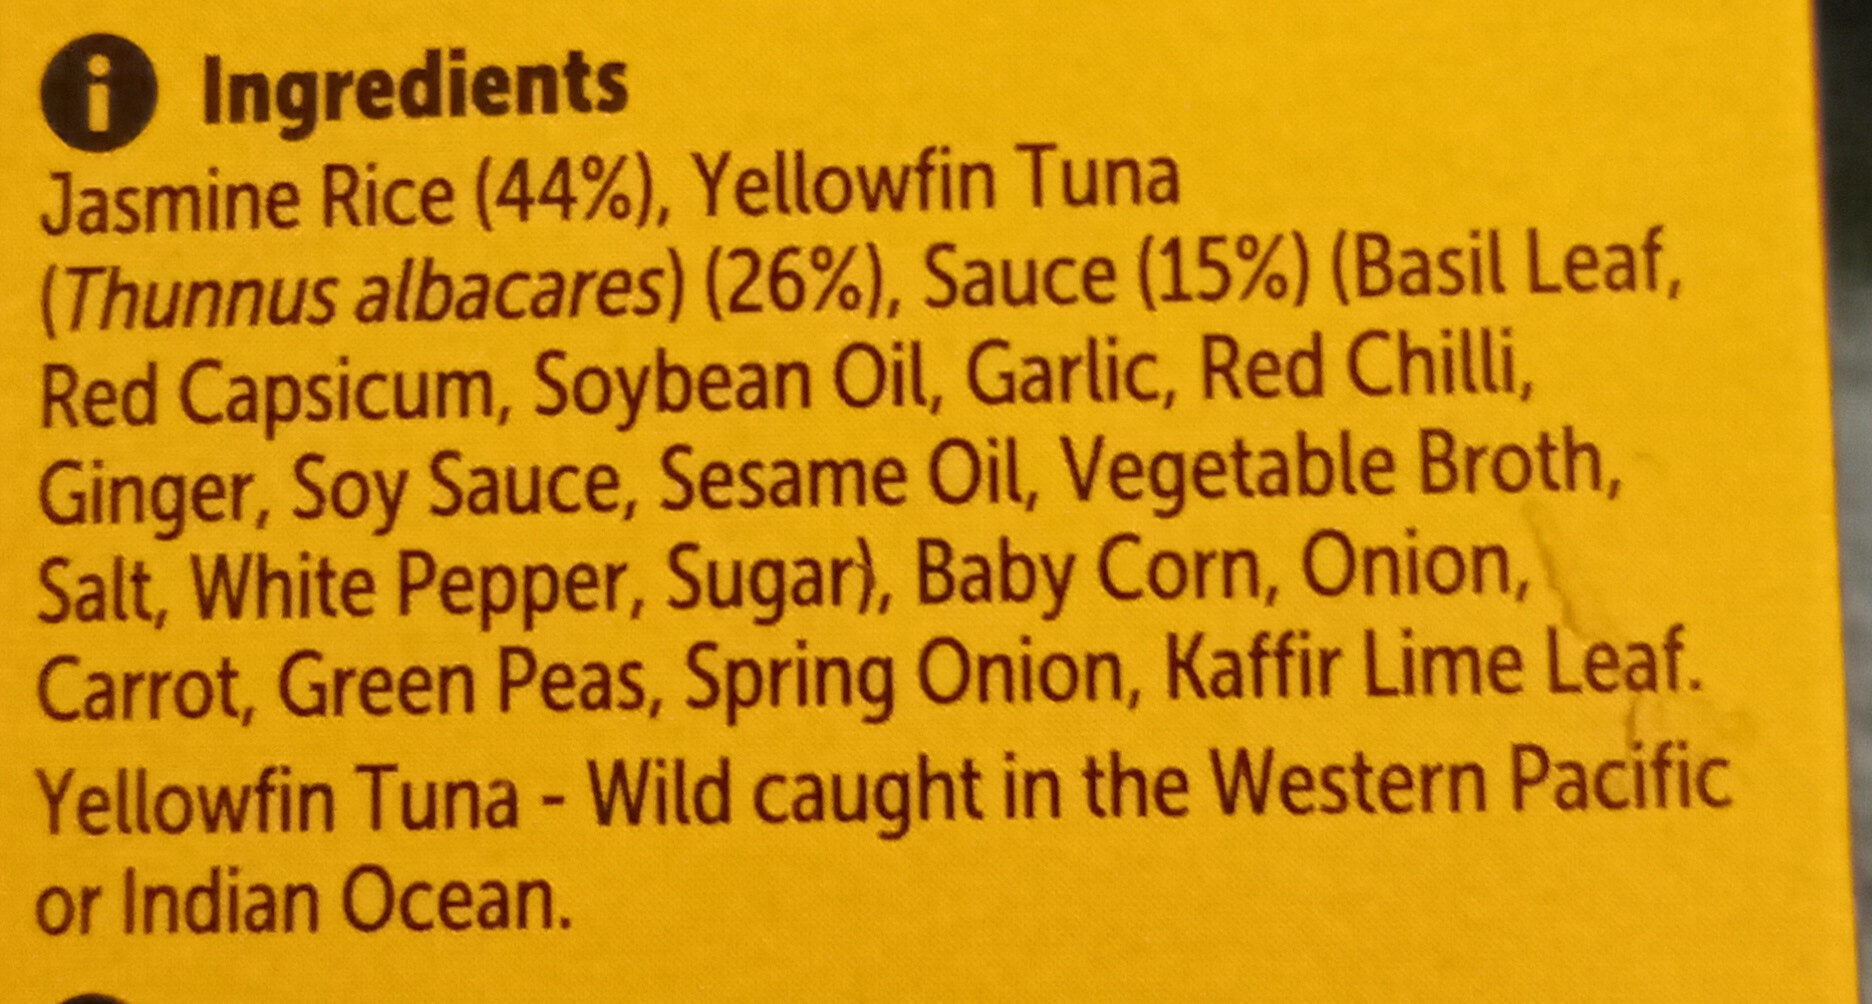 Yellowfin Tuna & Rice: Spicy Thai - Ingredients